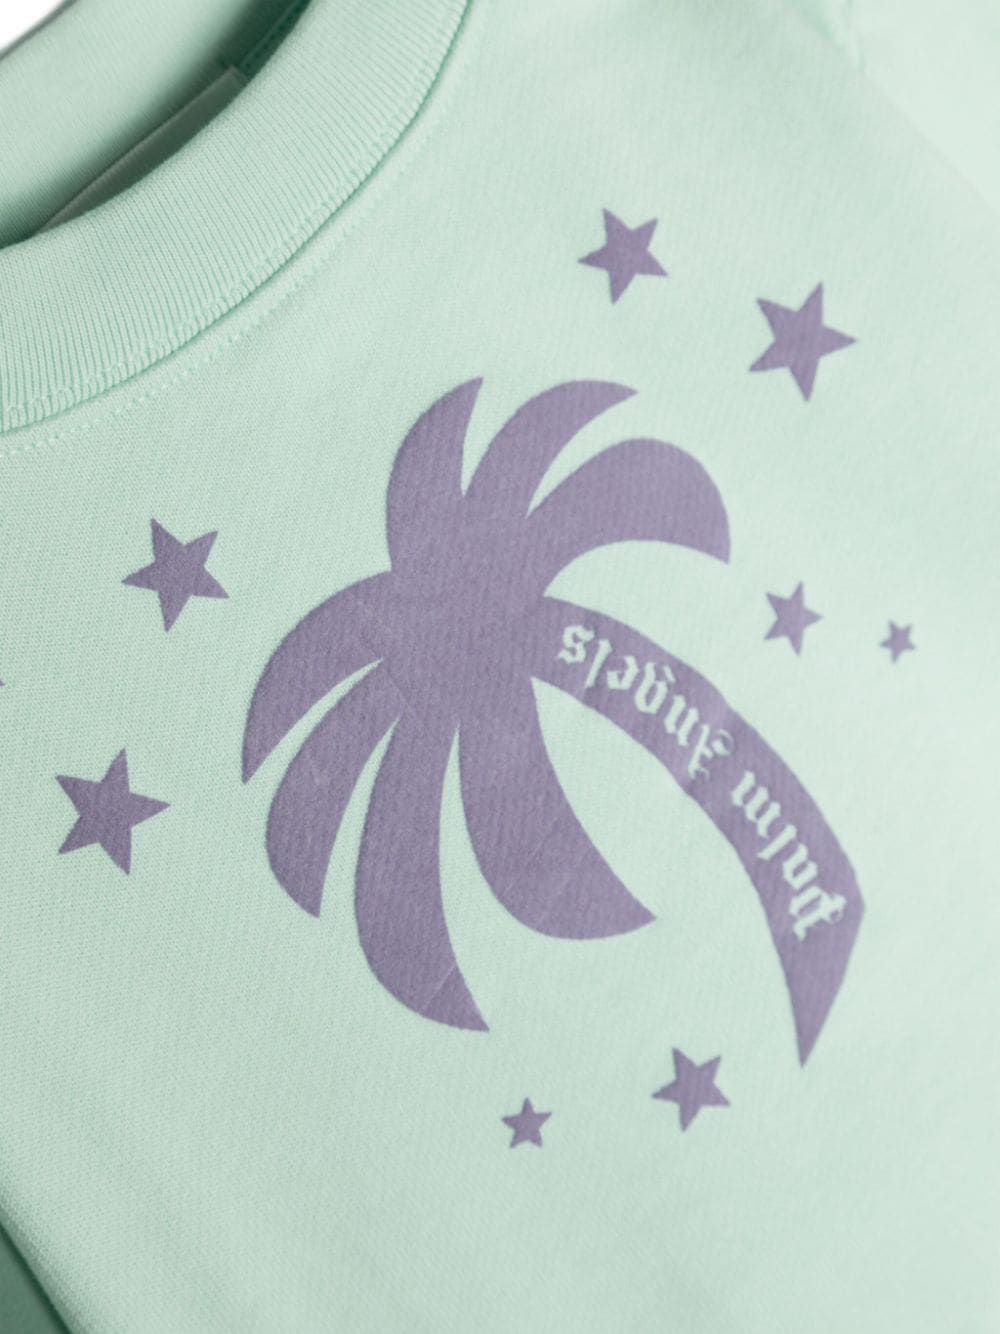 Palm Stars cotton sweatshirt